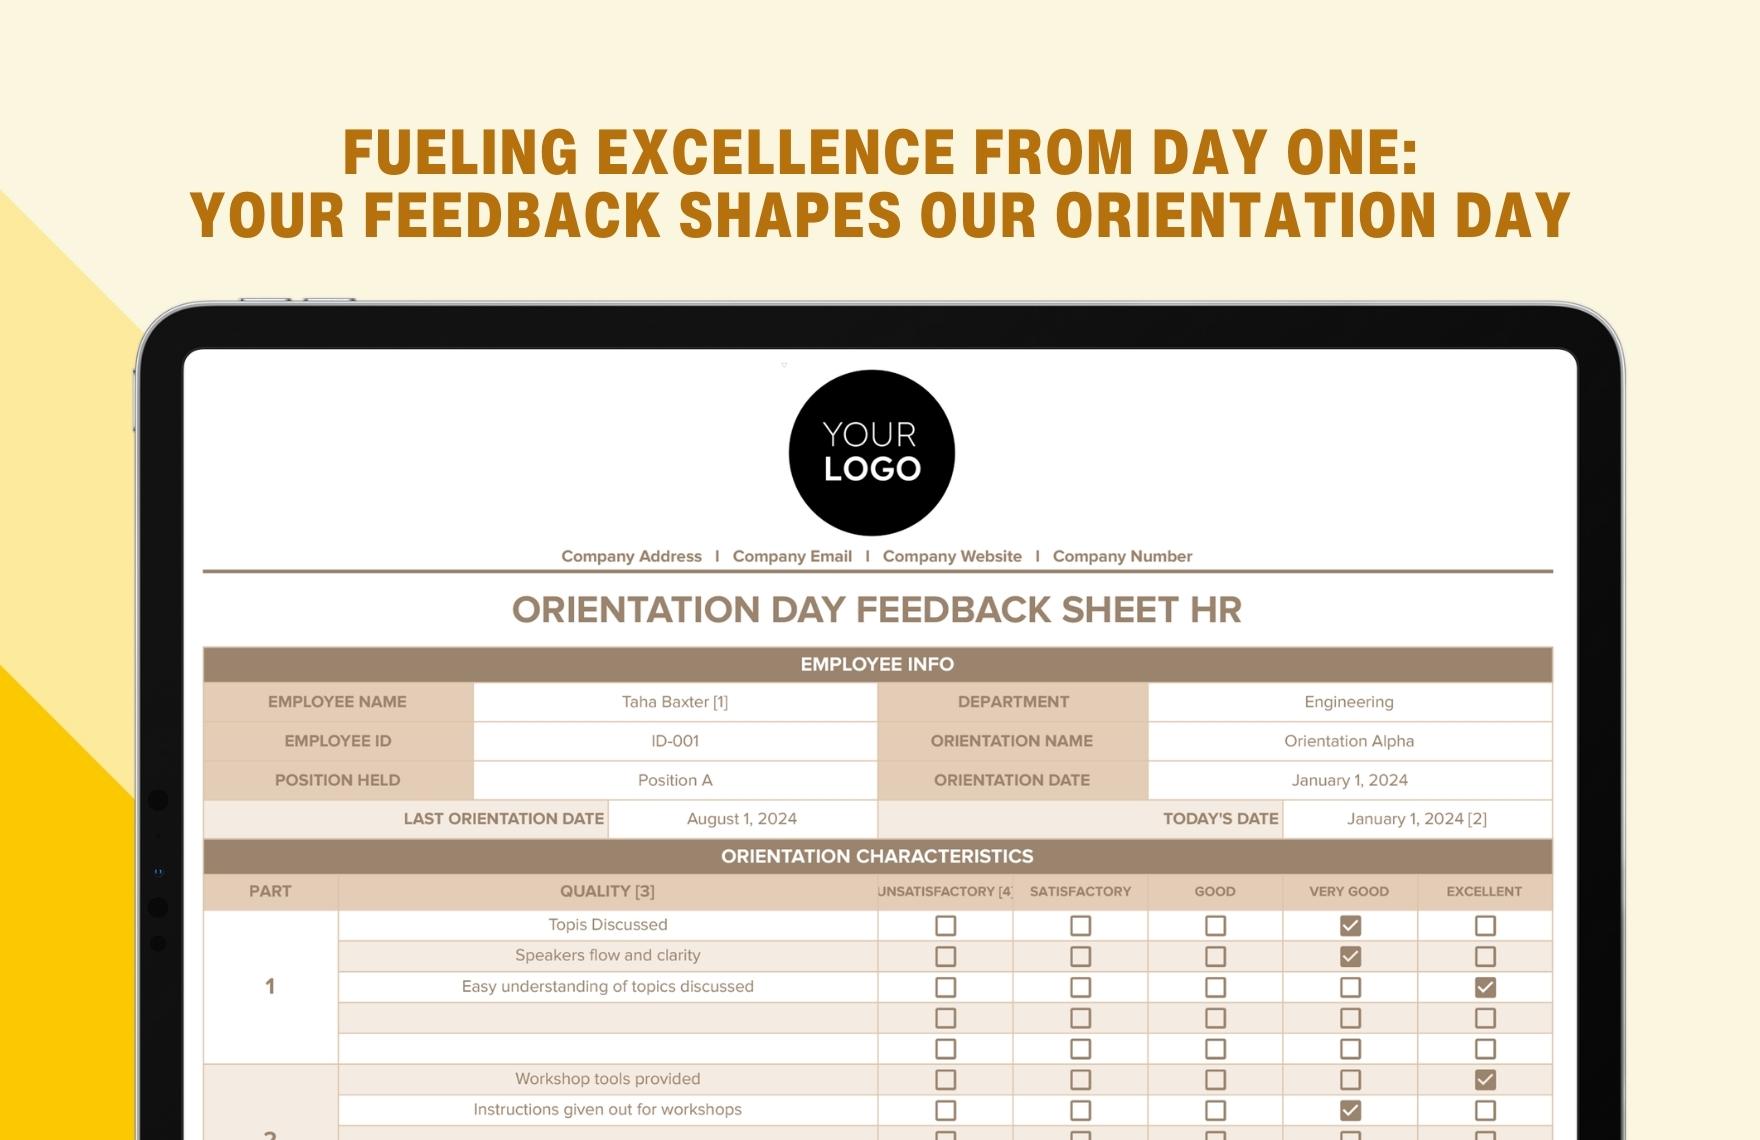 Orientation Day Feedback Sheet HR Template